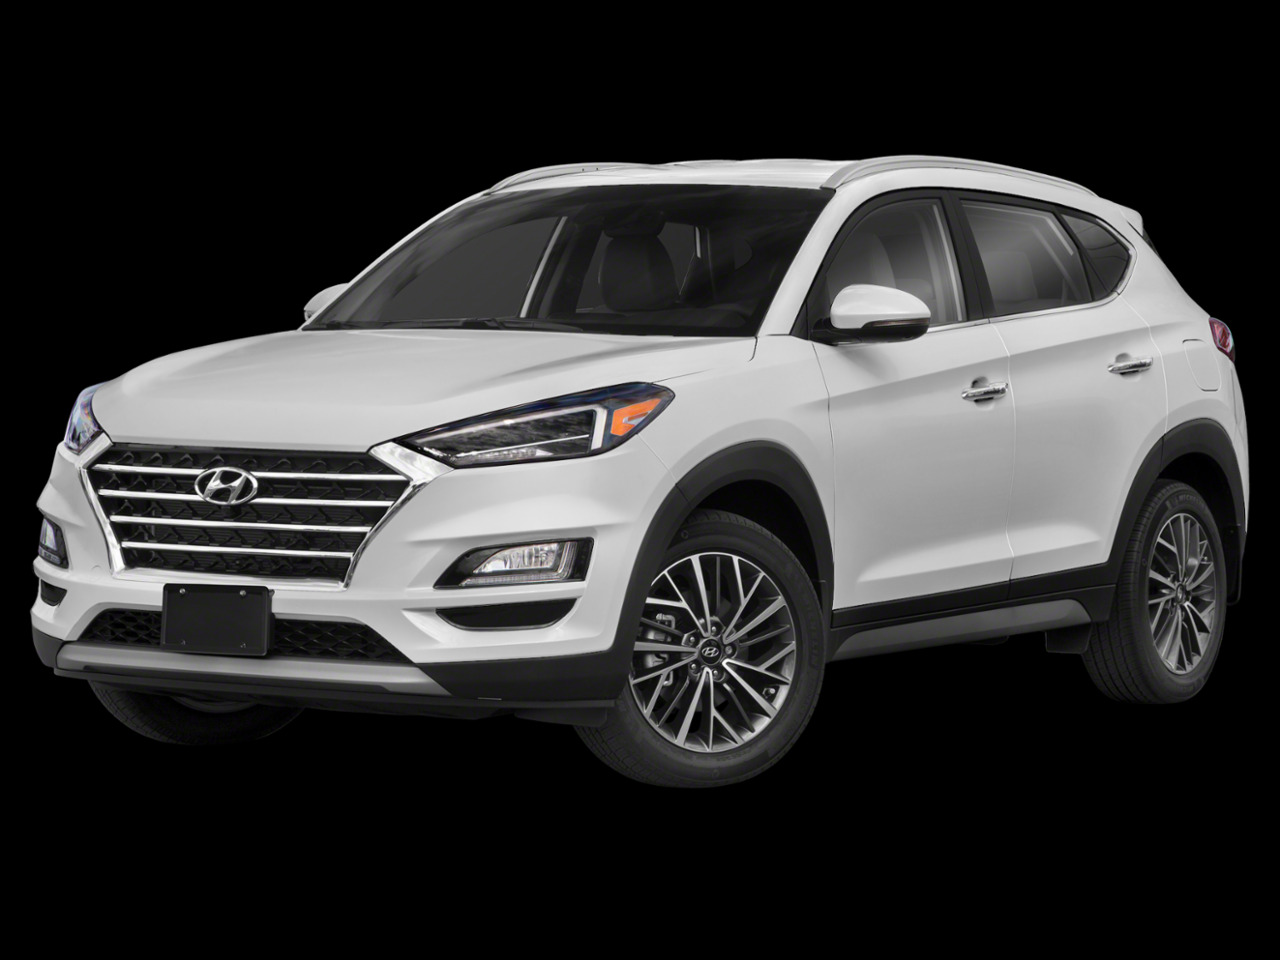 2019 Hyundai Tucson luxury